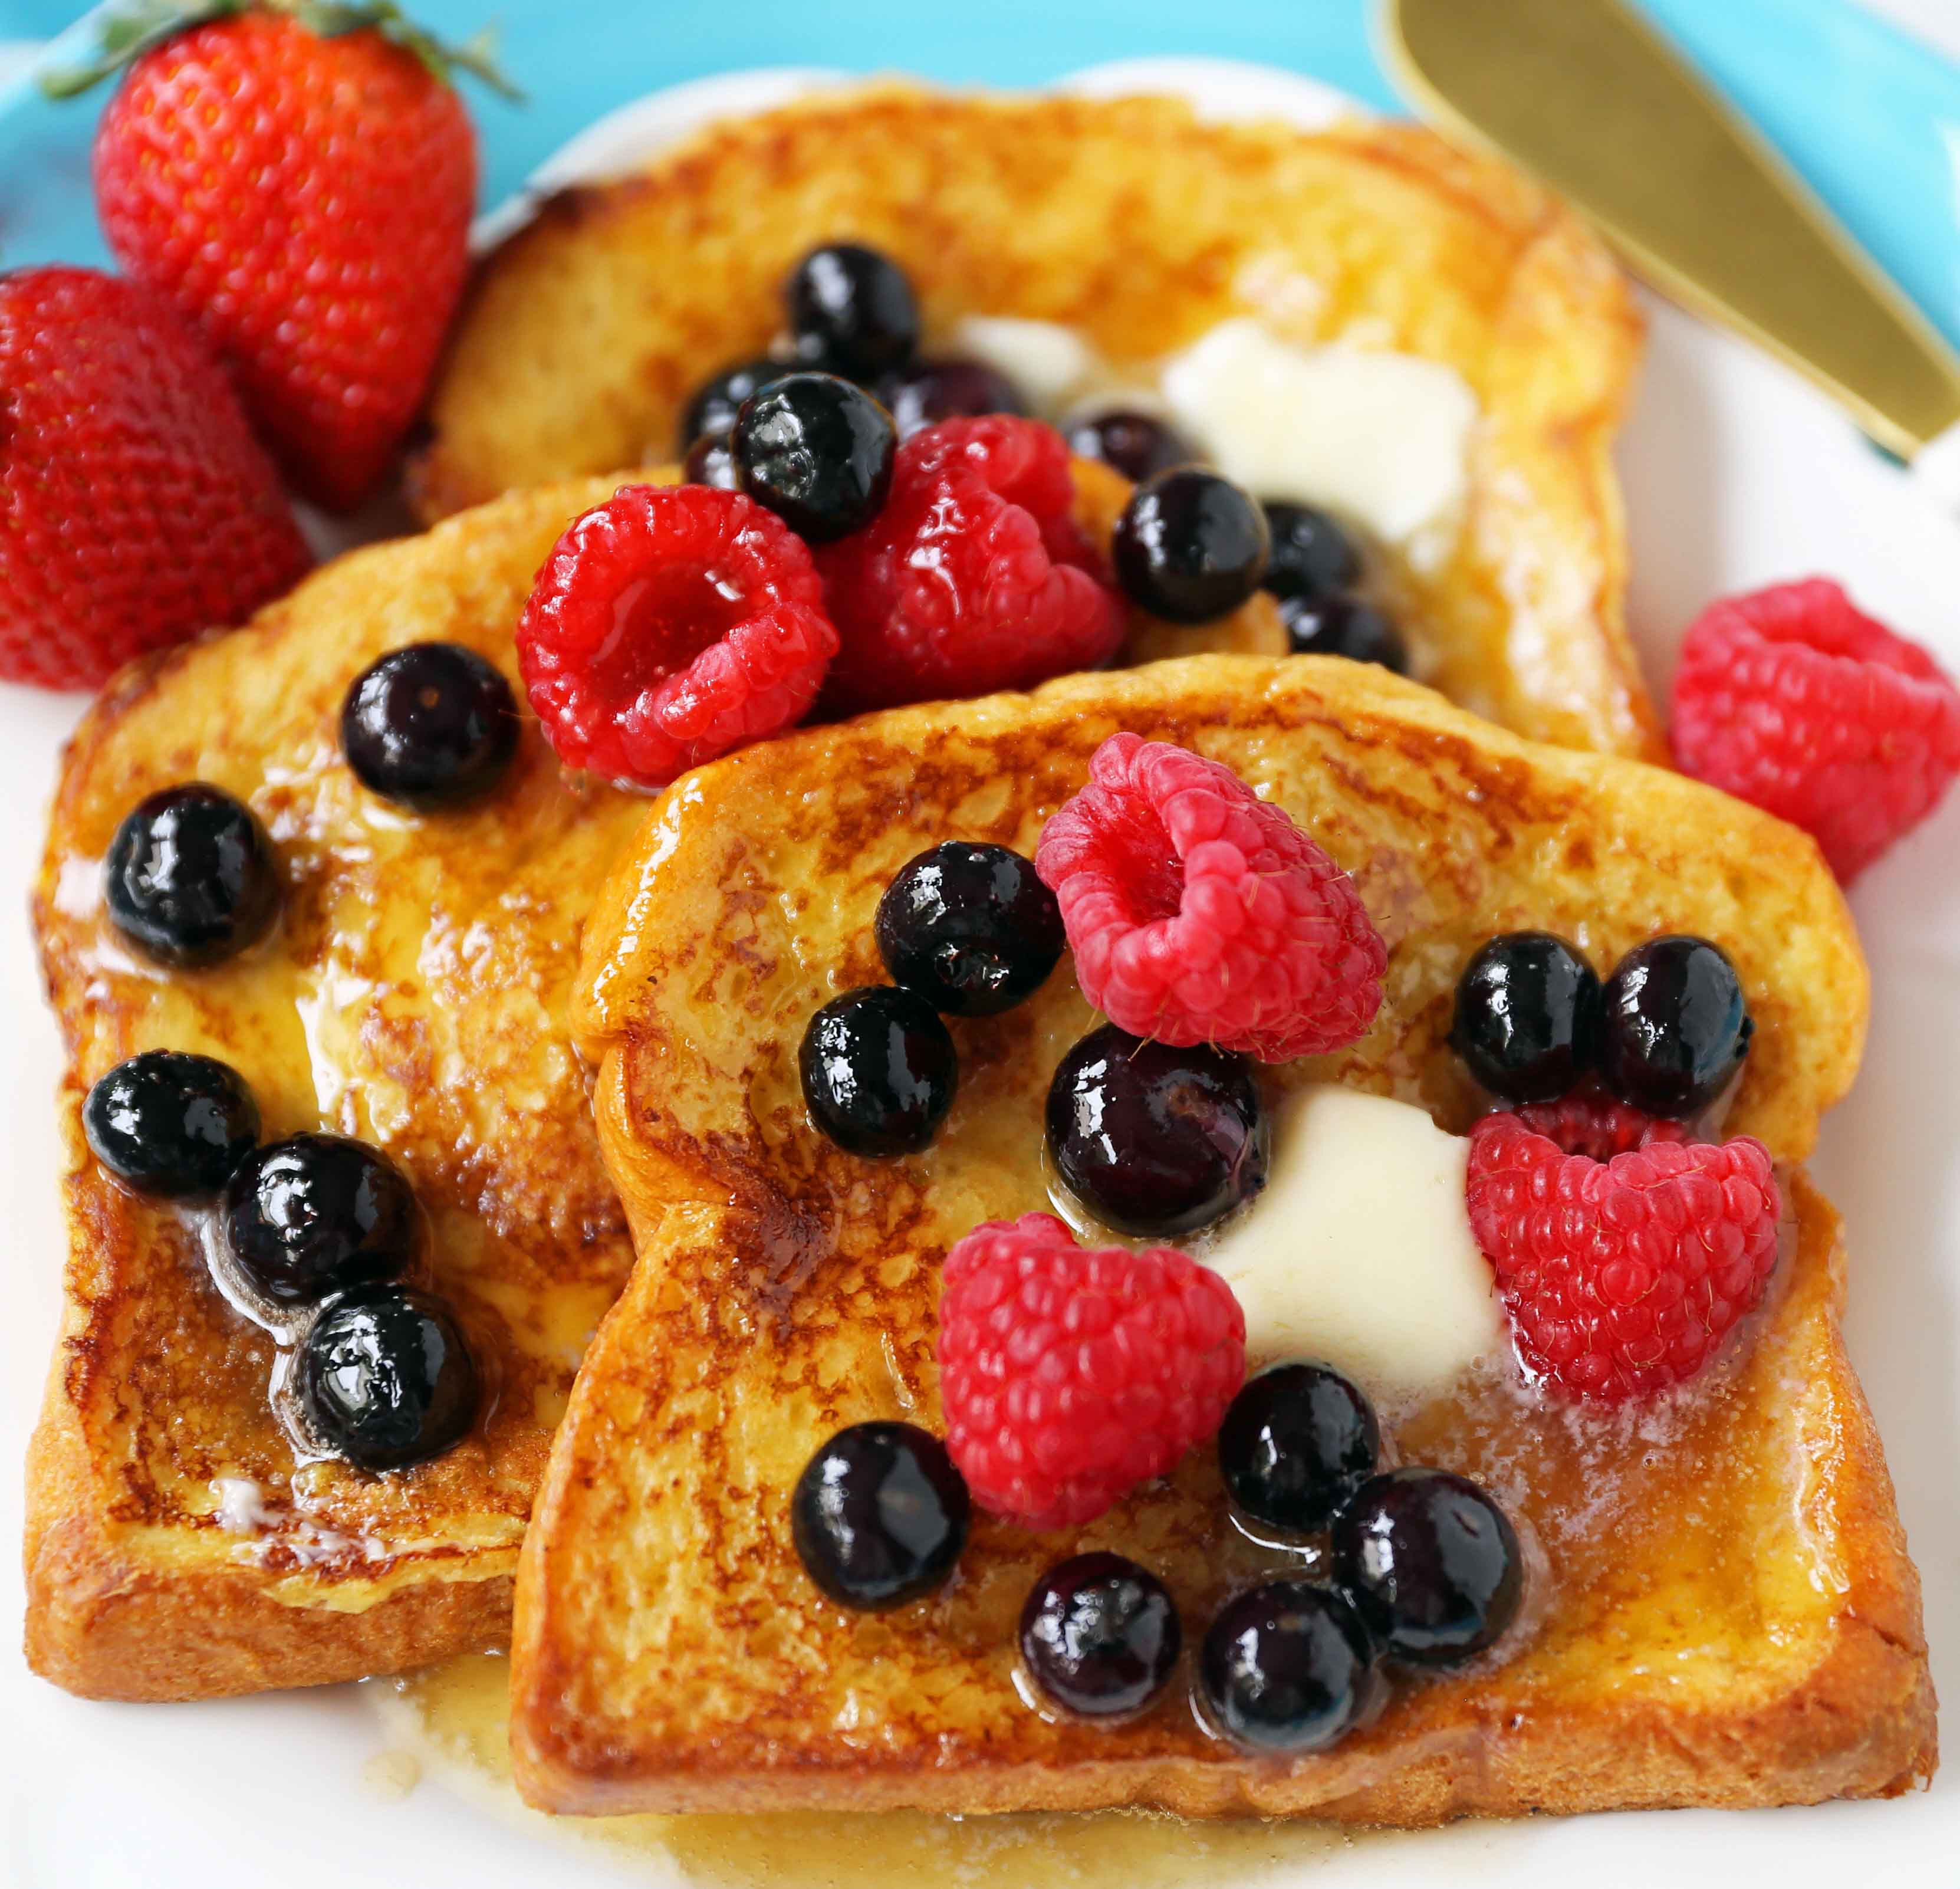 https://www.modernhoney.com/wp-content/uploads/2018/07/Brioche-French-Toast-Recipe-with-Berries.jpg